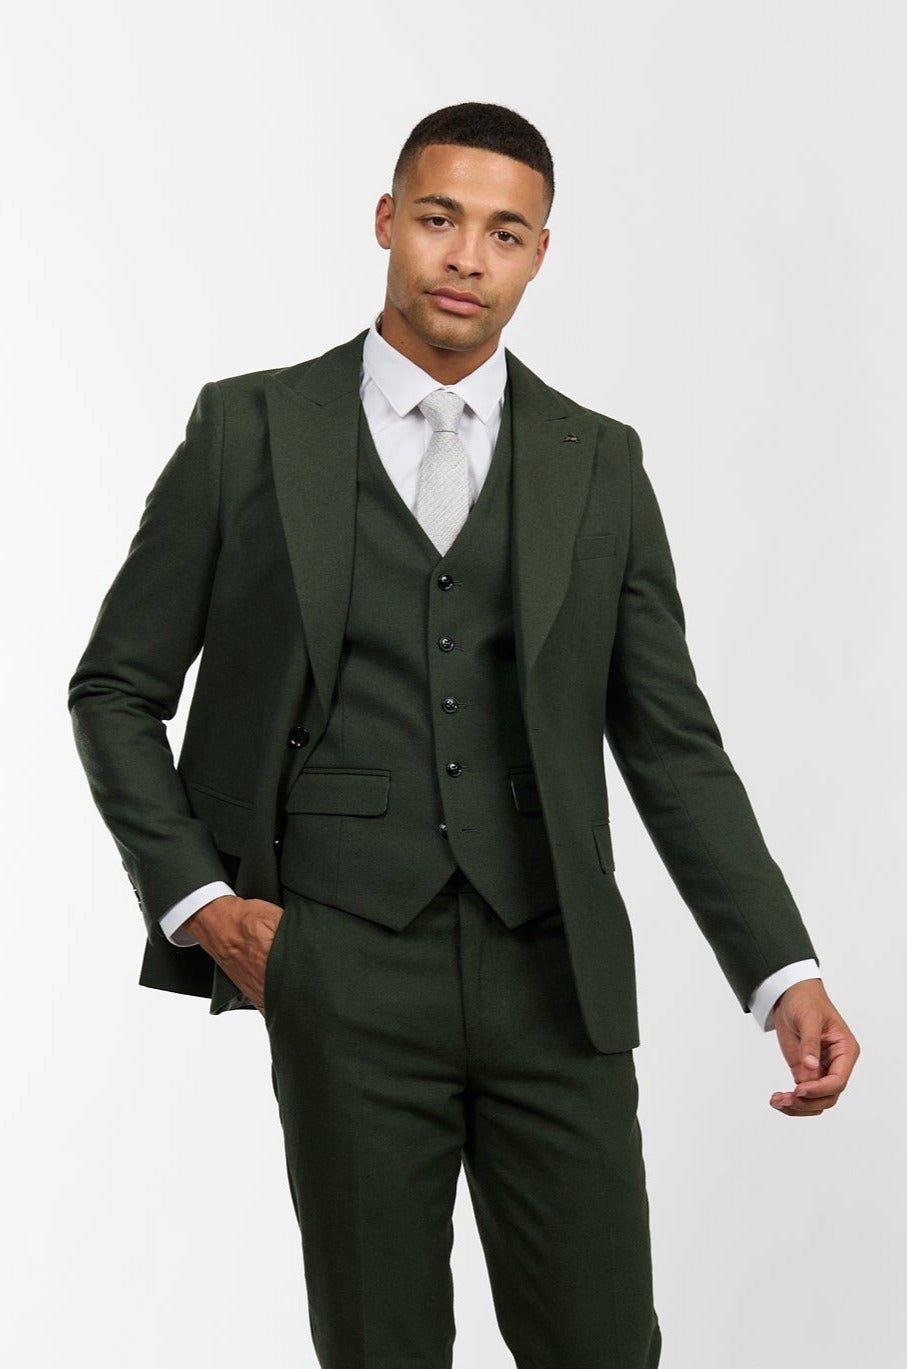 Ralph Wool Tweed Three Piece Slim Fit Suit in Mint Green